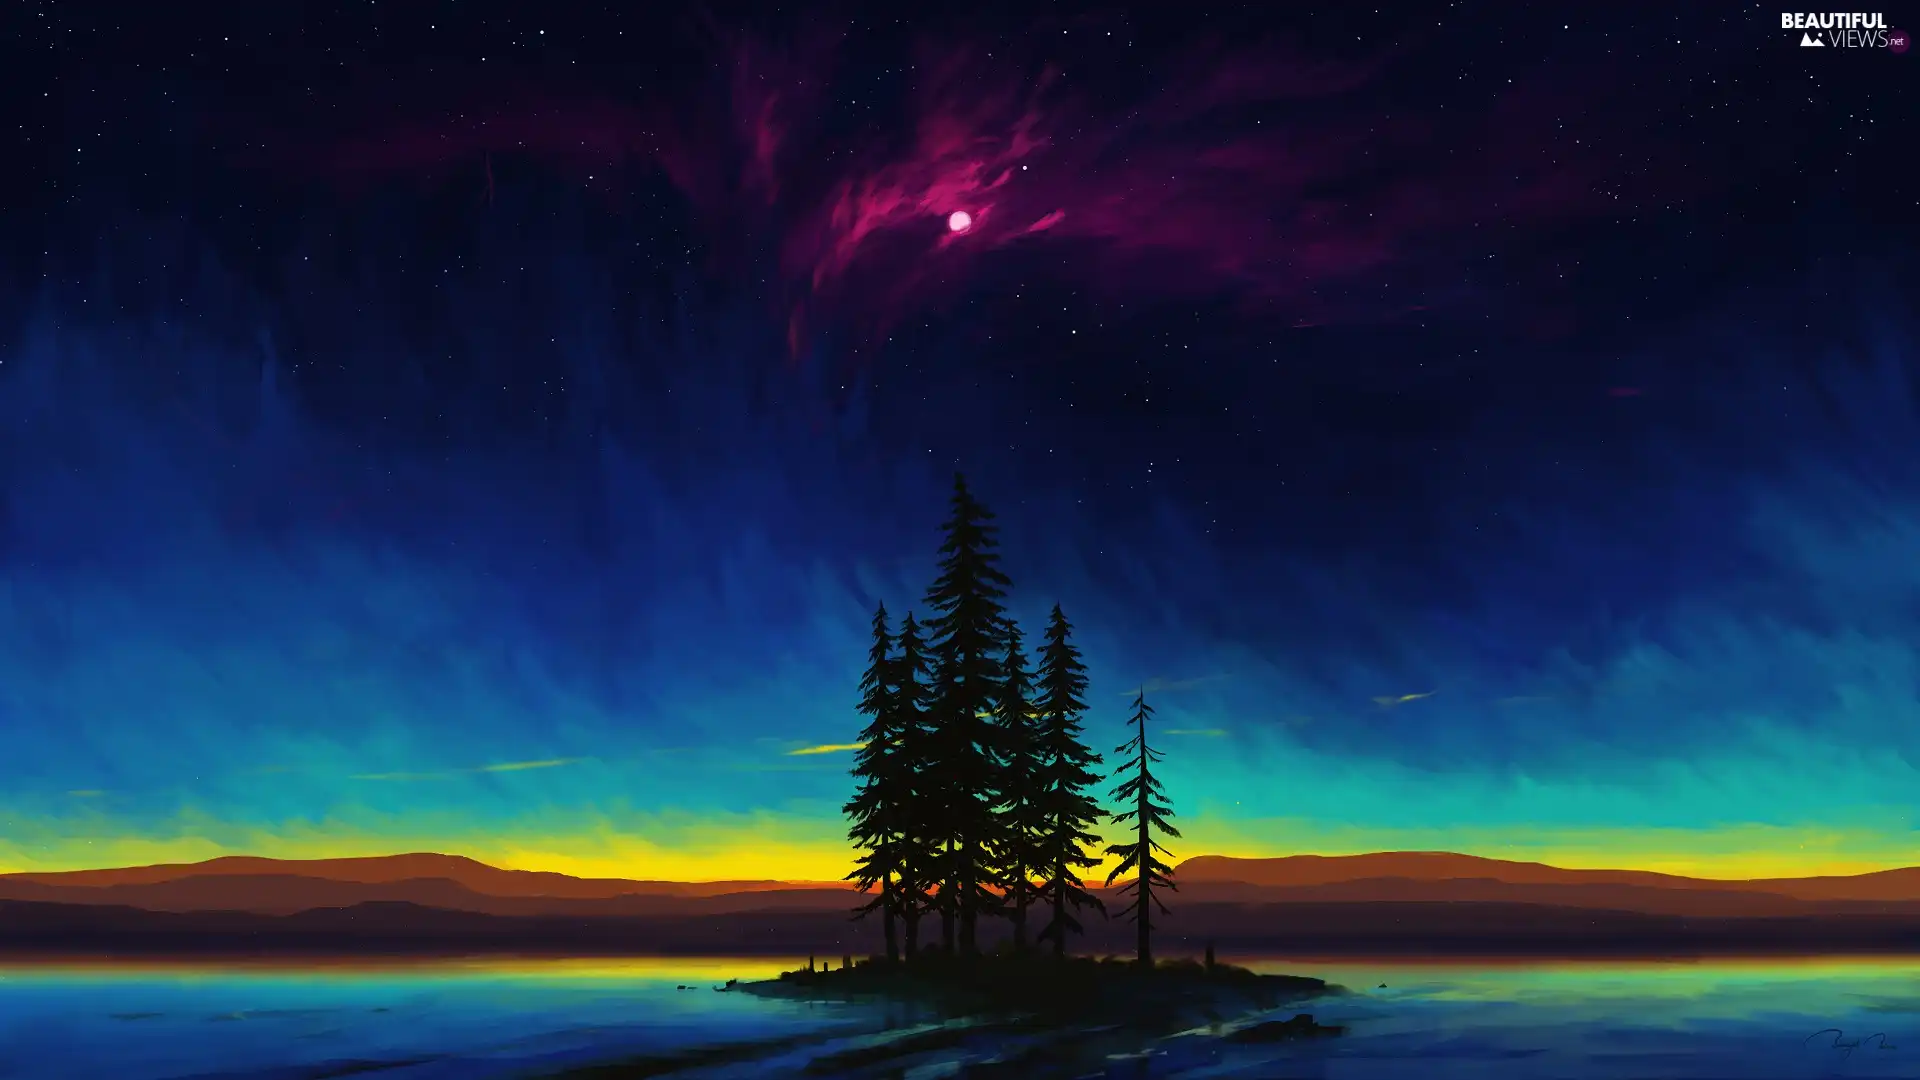 trees, viewes, graphics, Sky, moon, lake, Island, star